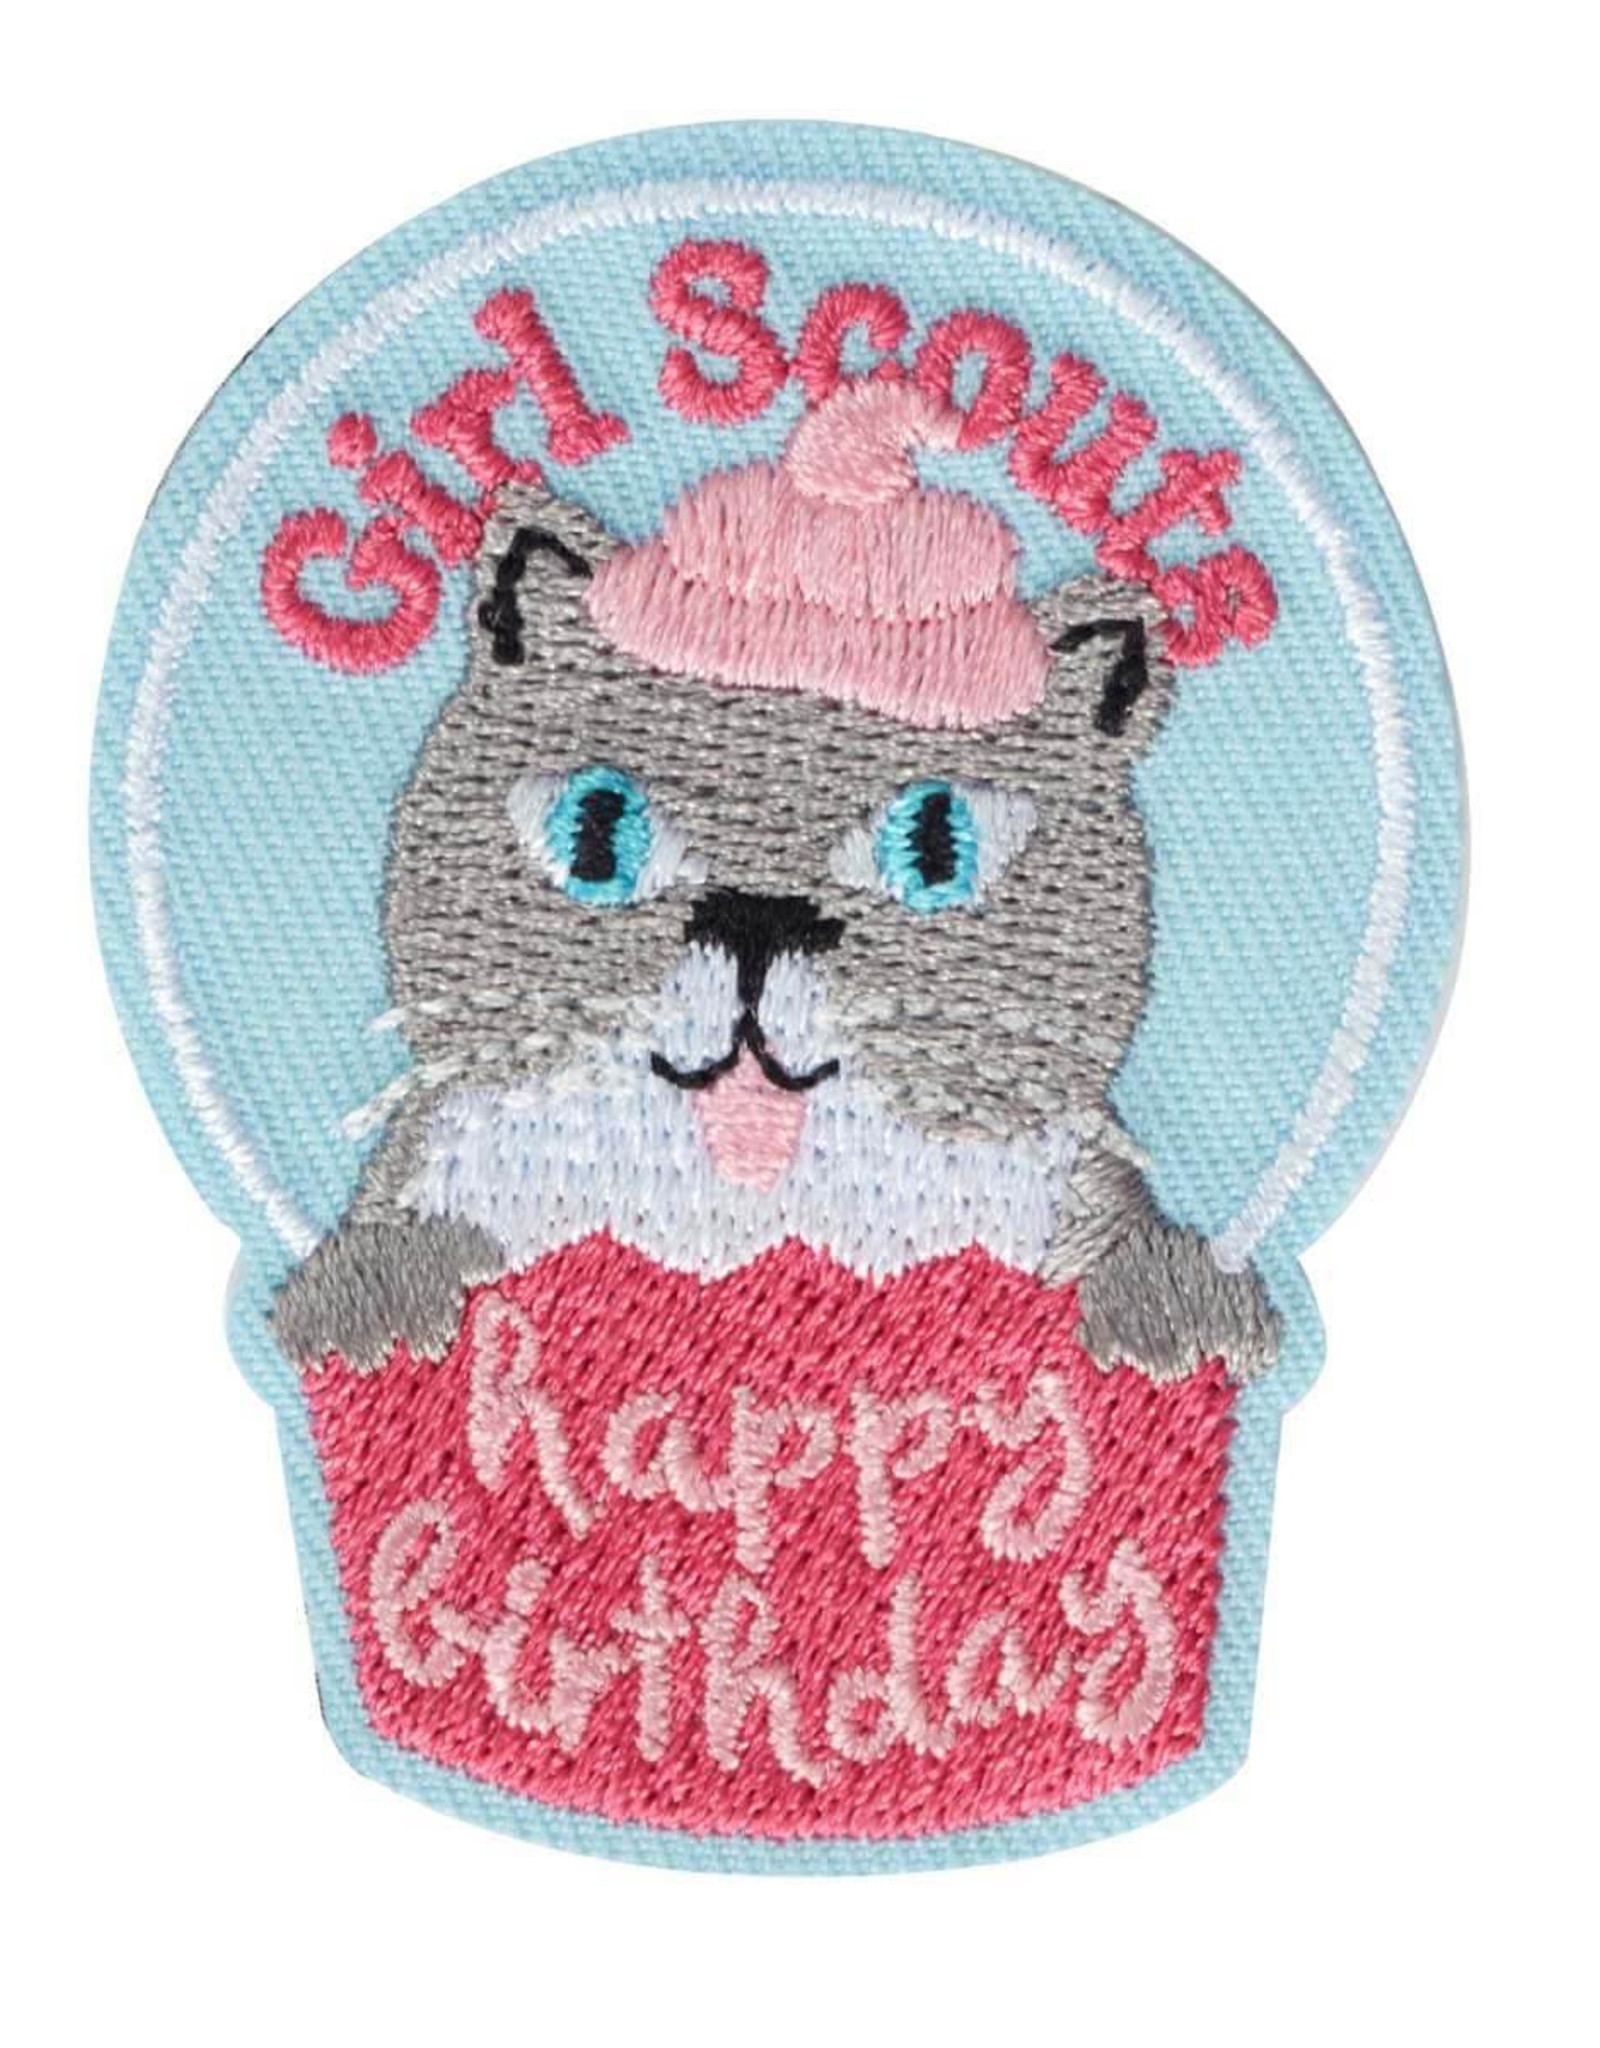 GSUSA GS Cupcake Kitten Birthday Patch